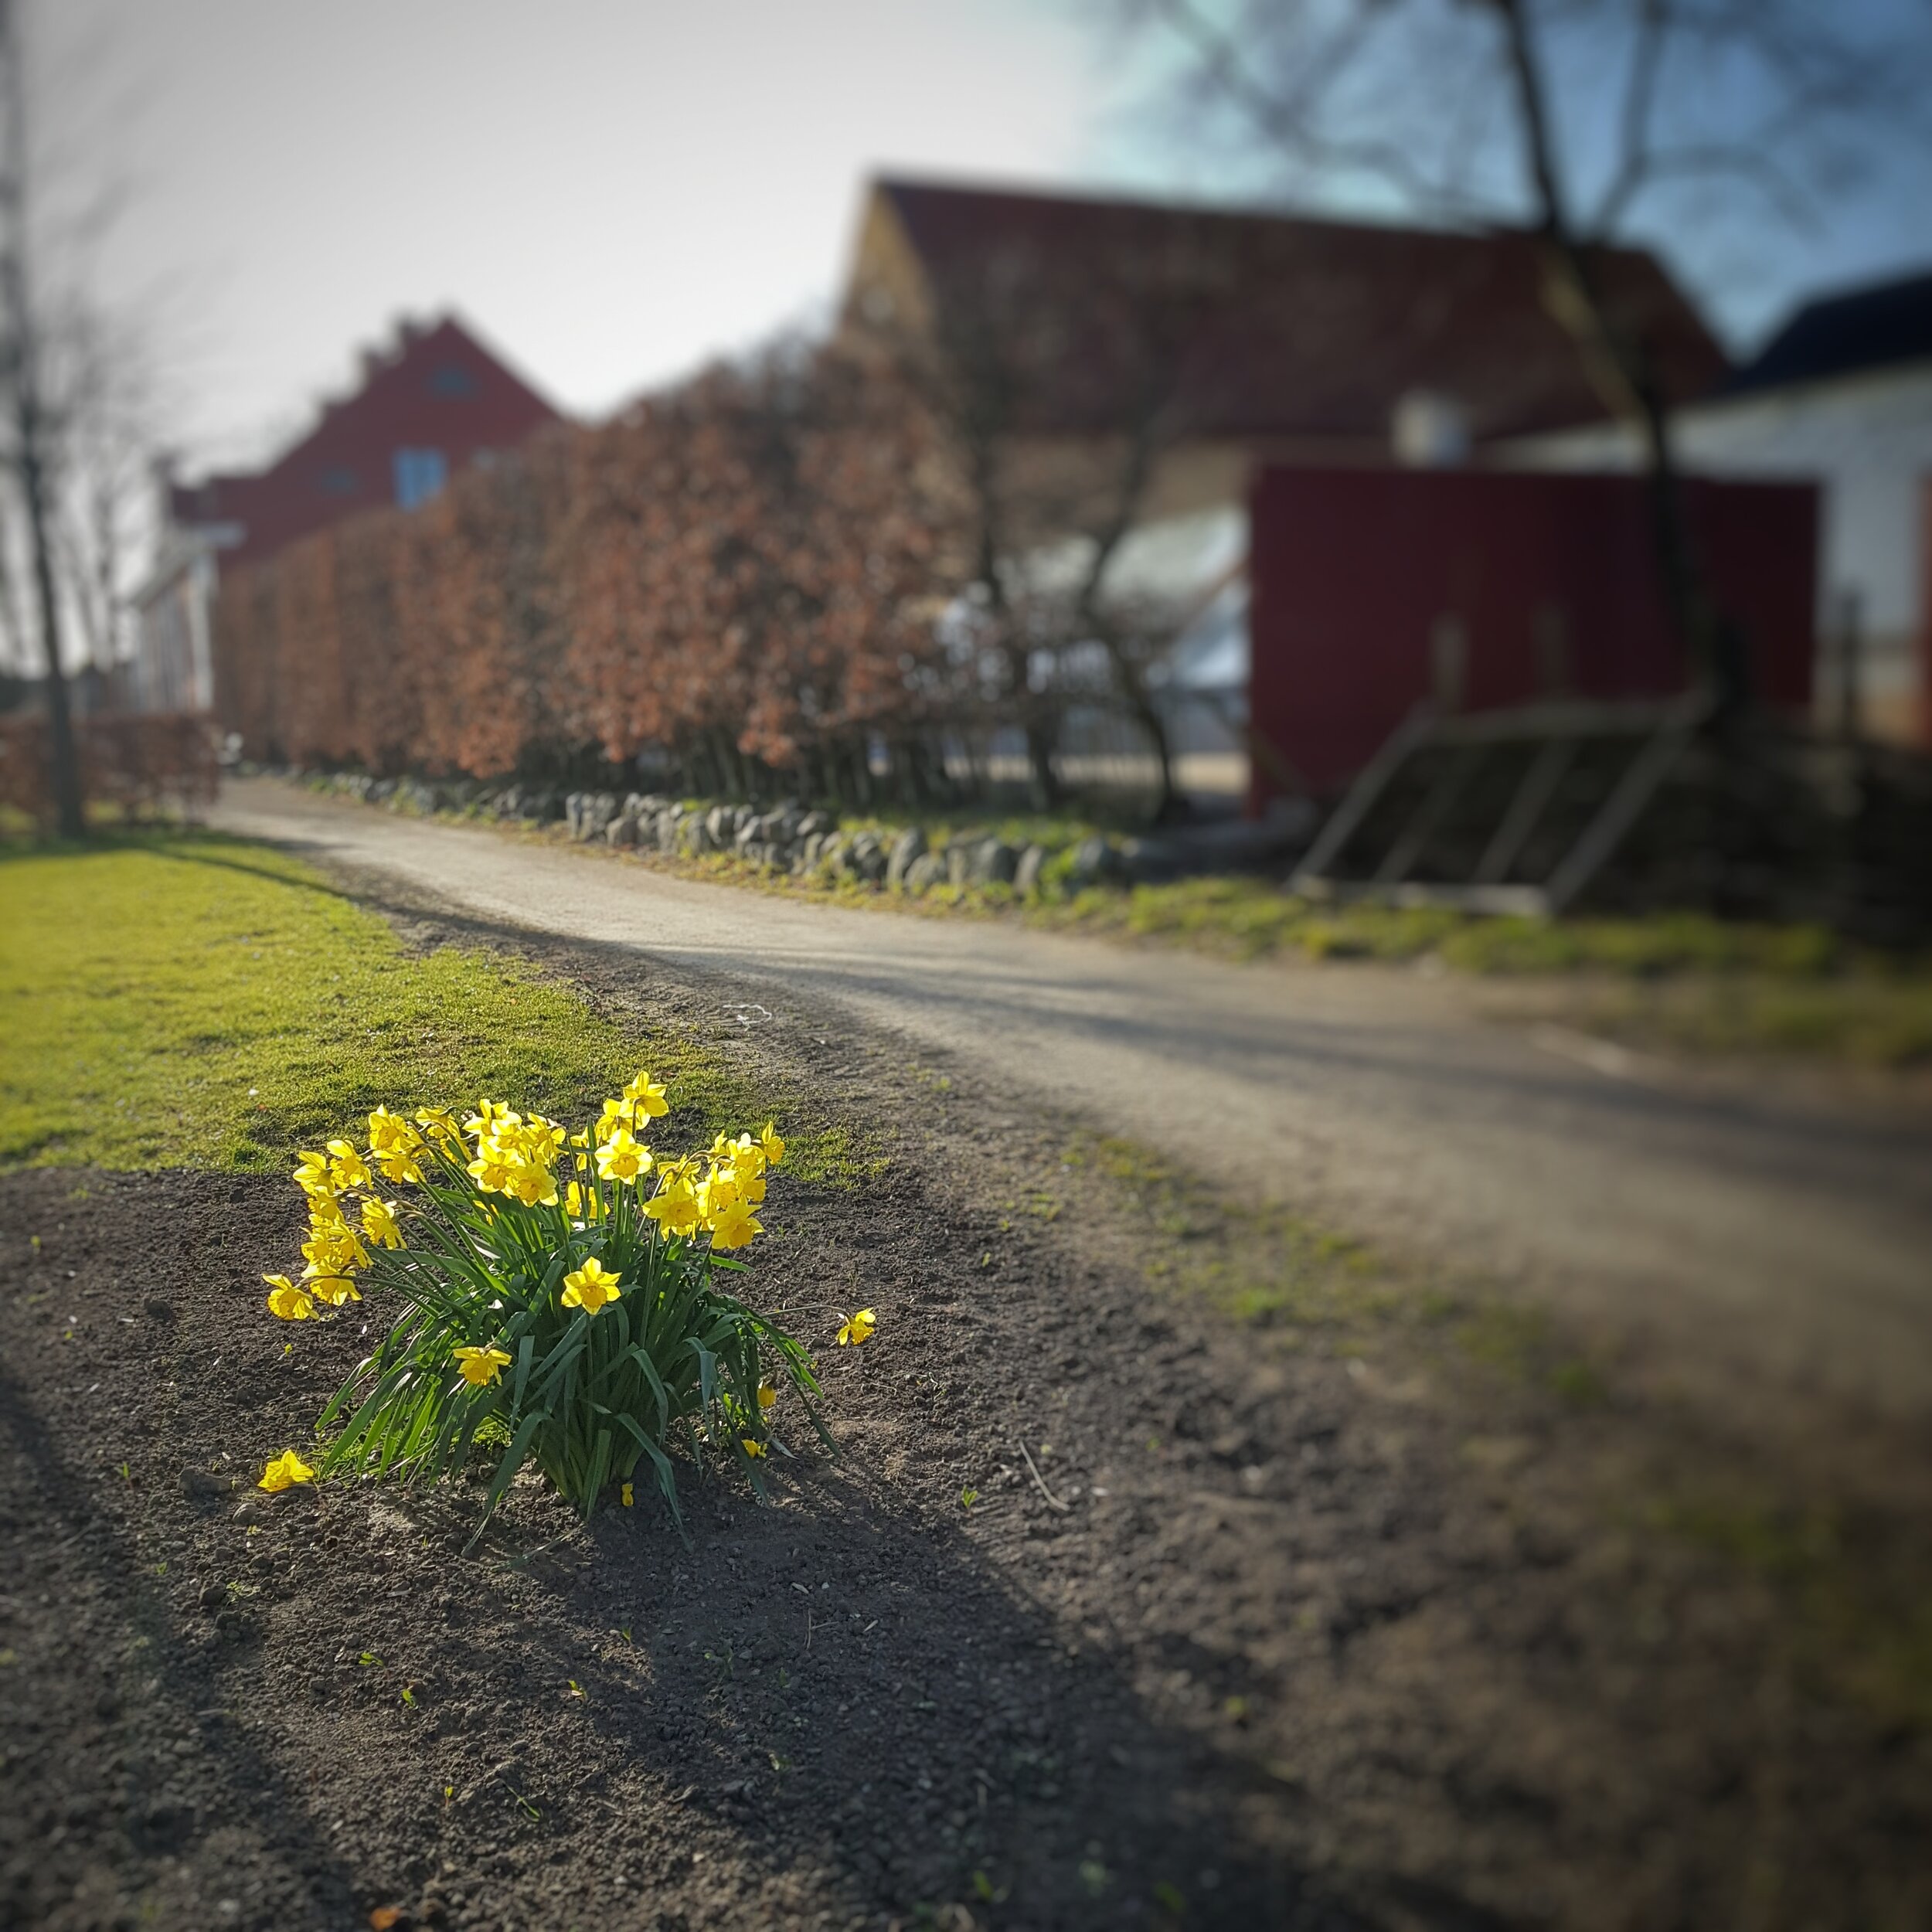 Day 98 - April 7: Daffodils